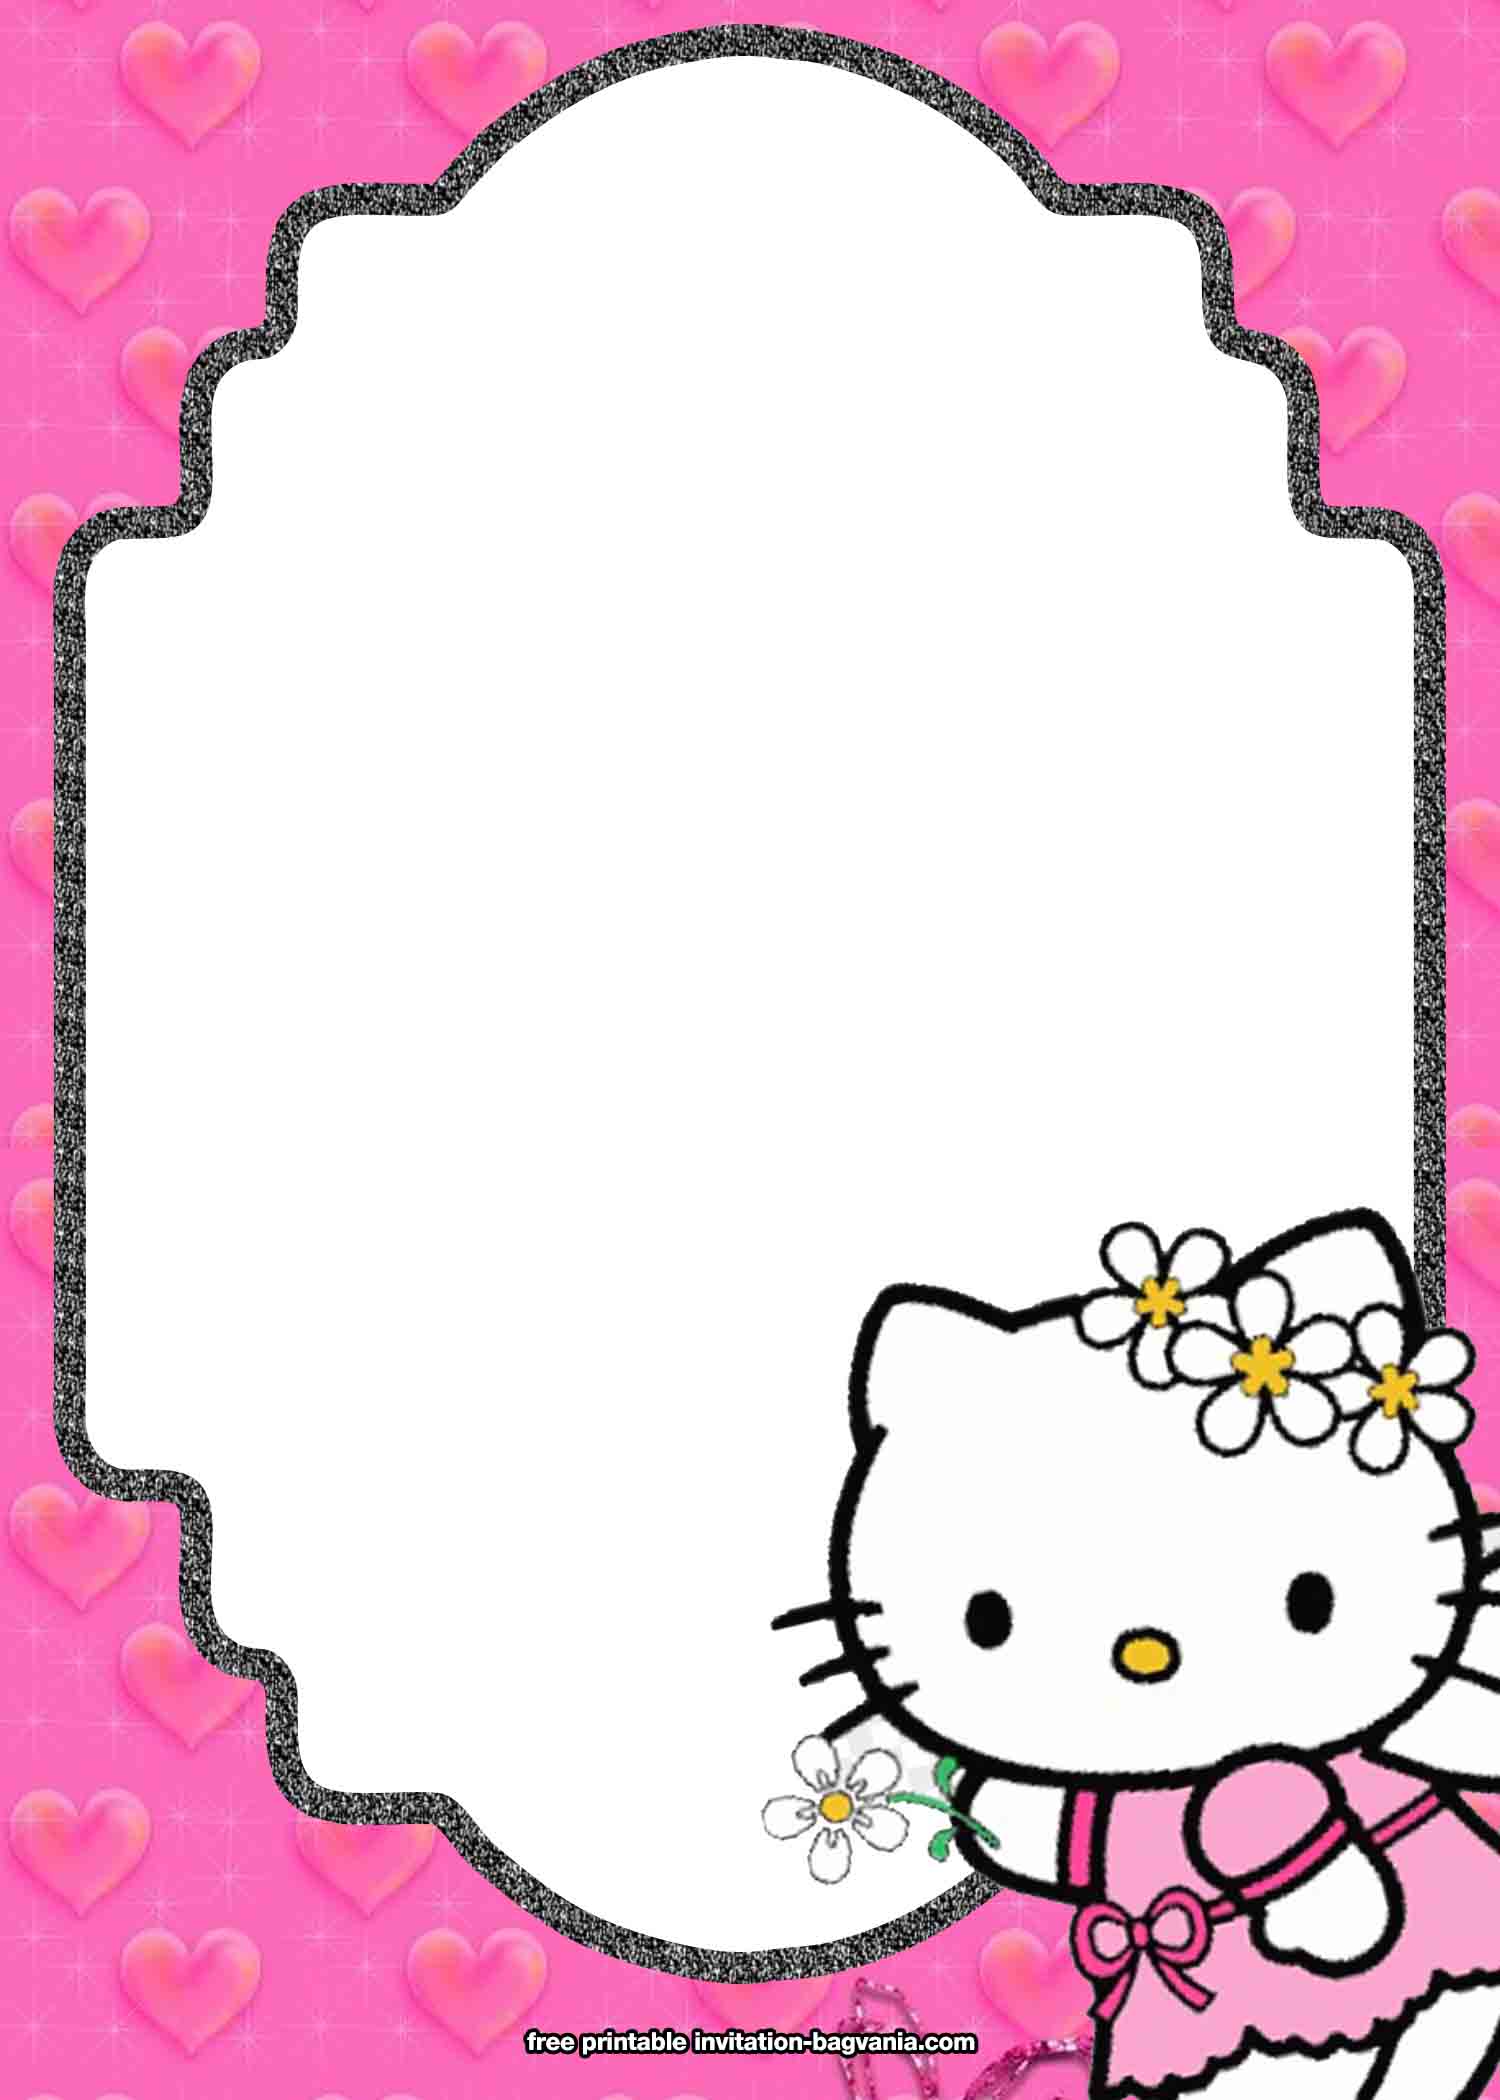 get-18-blank-hello-kitty-invitation-design